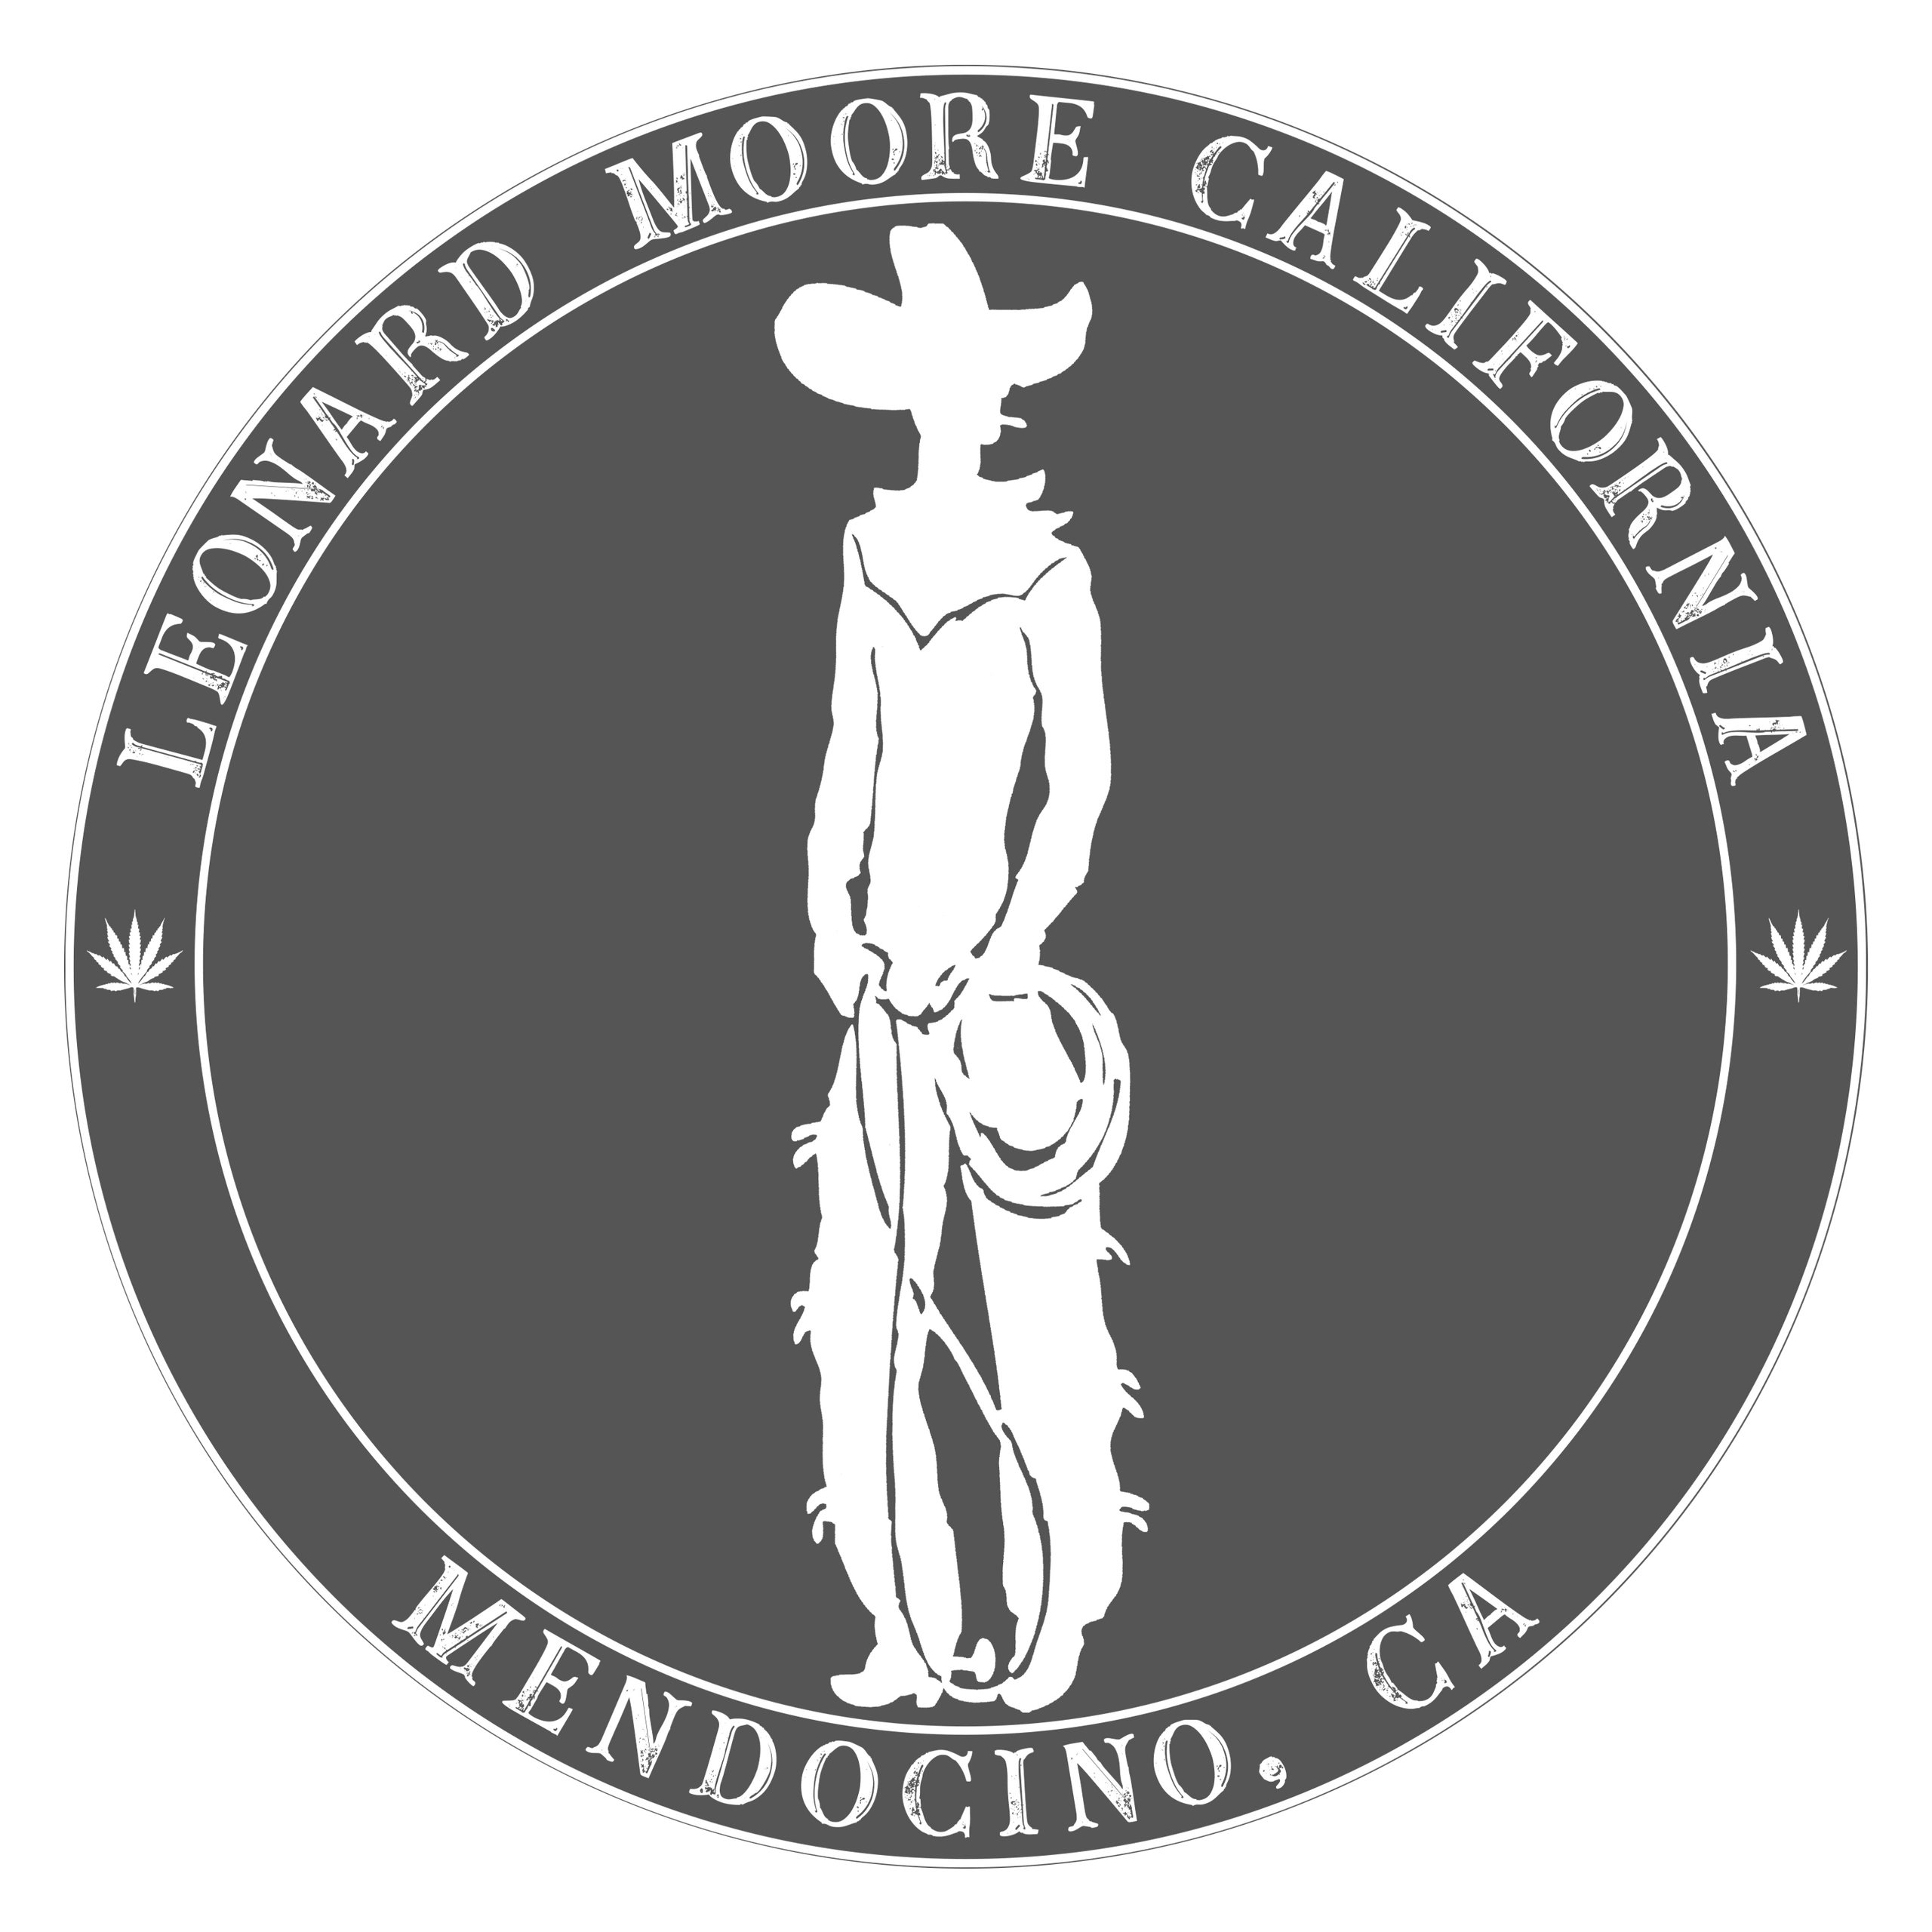 Leonard Moore California logo